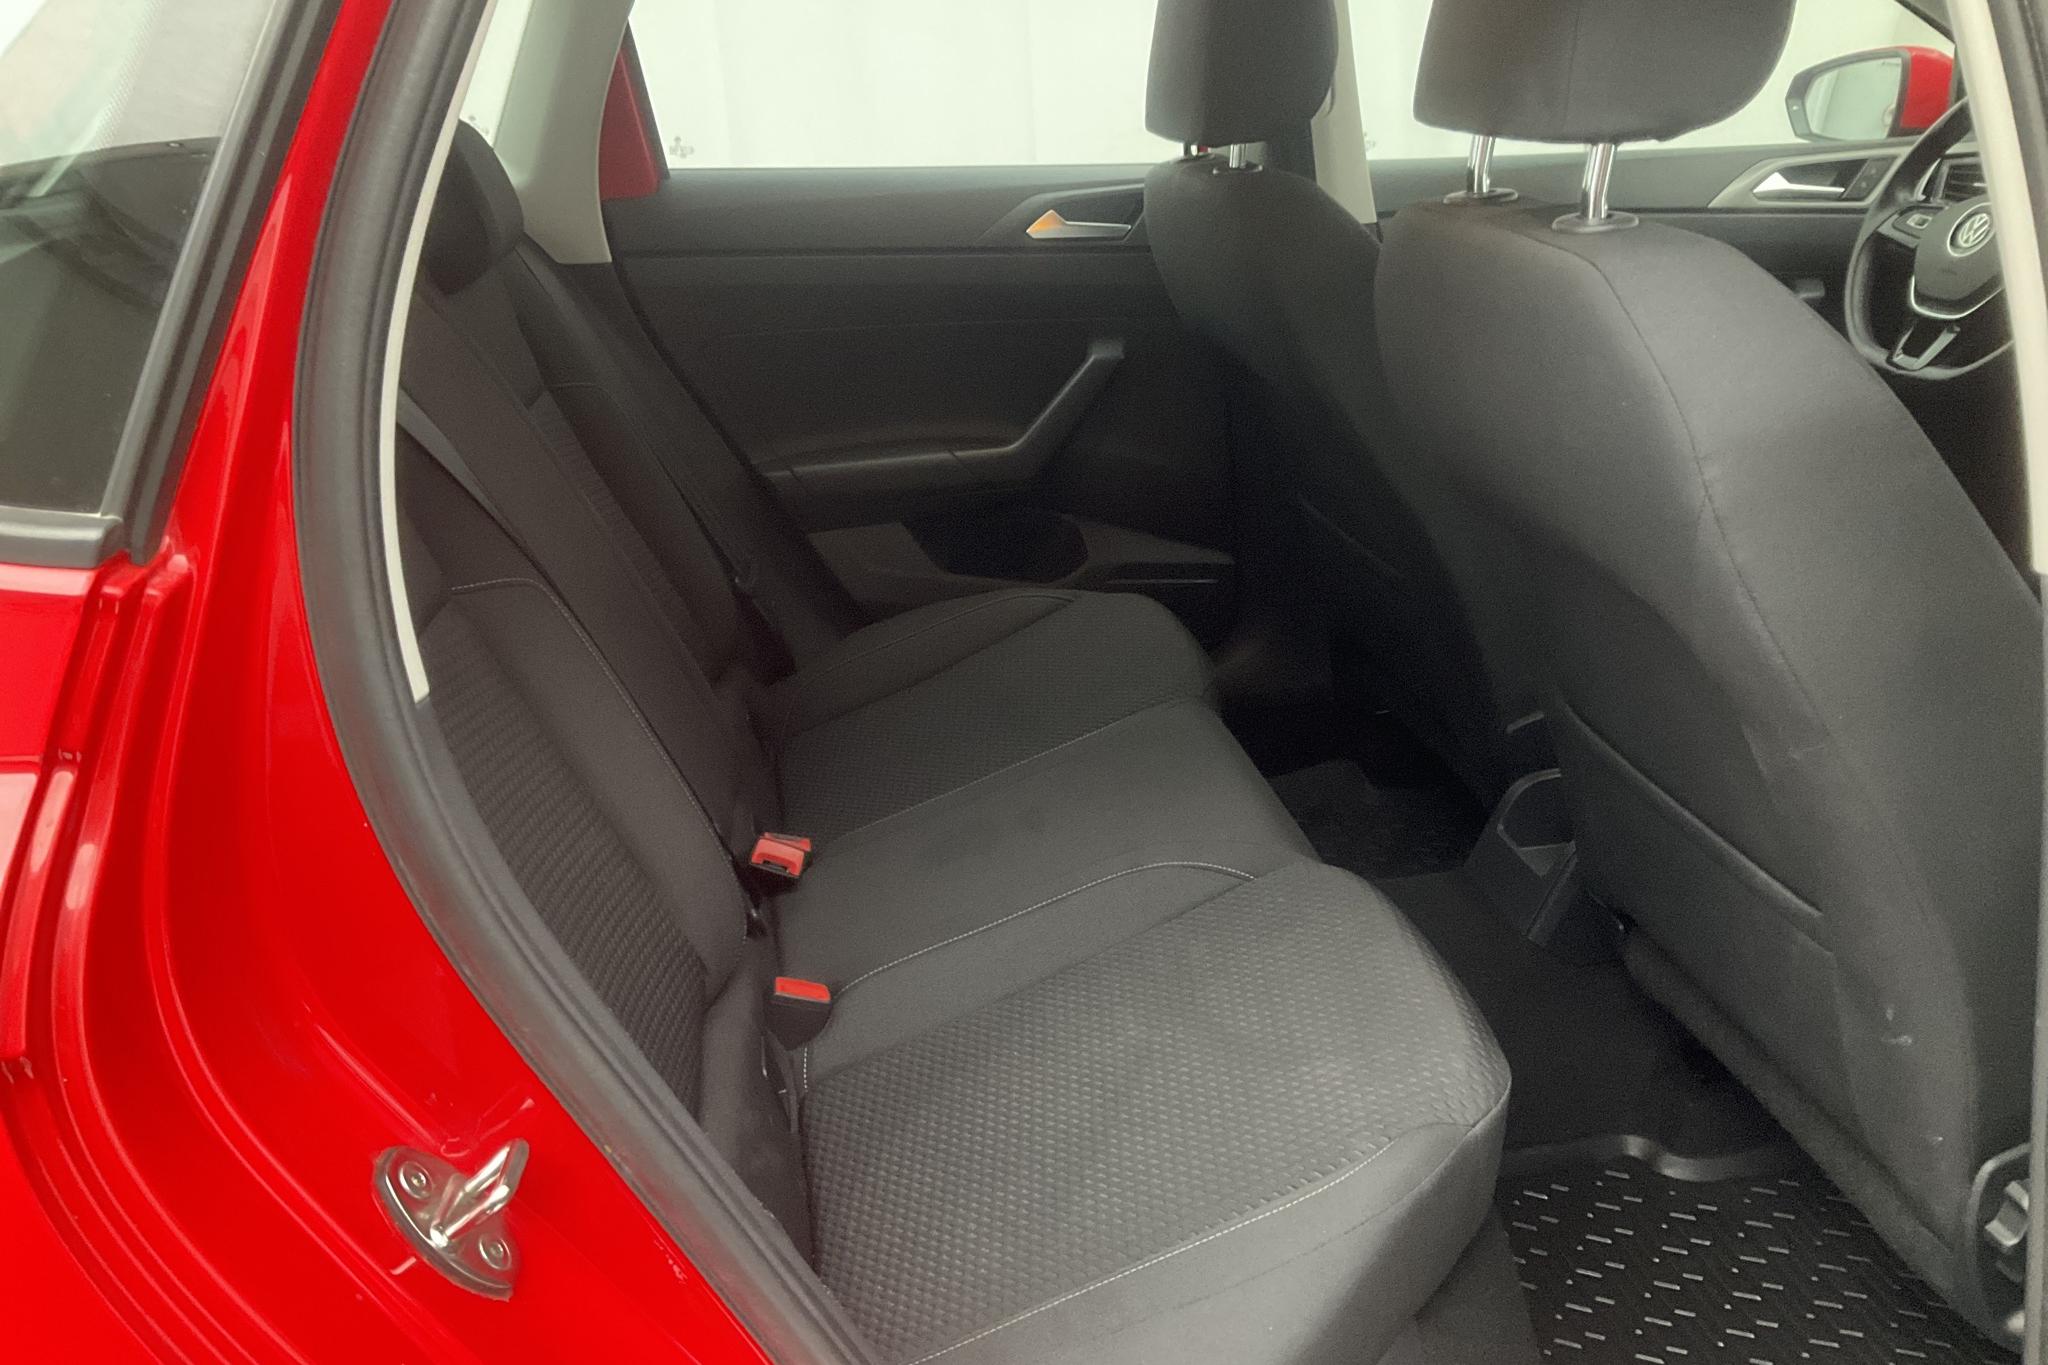 VW Polo 1.0 TSI 5dr (95hk) - 2 714 mil - Manuell - röd - 2018